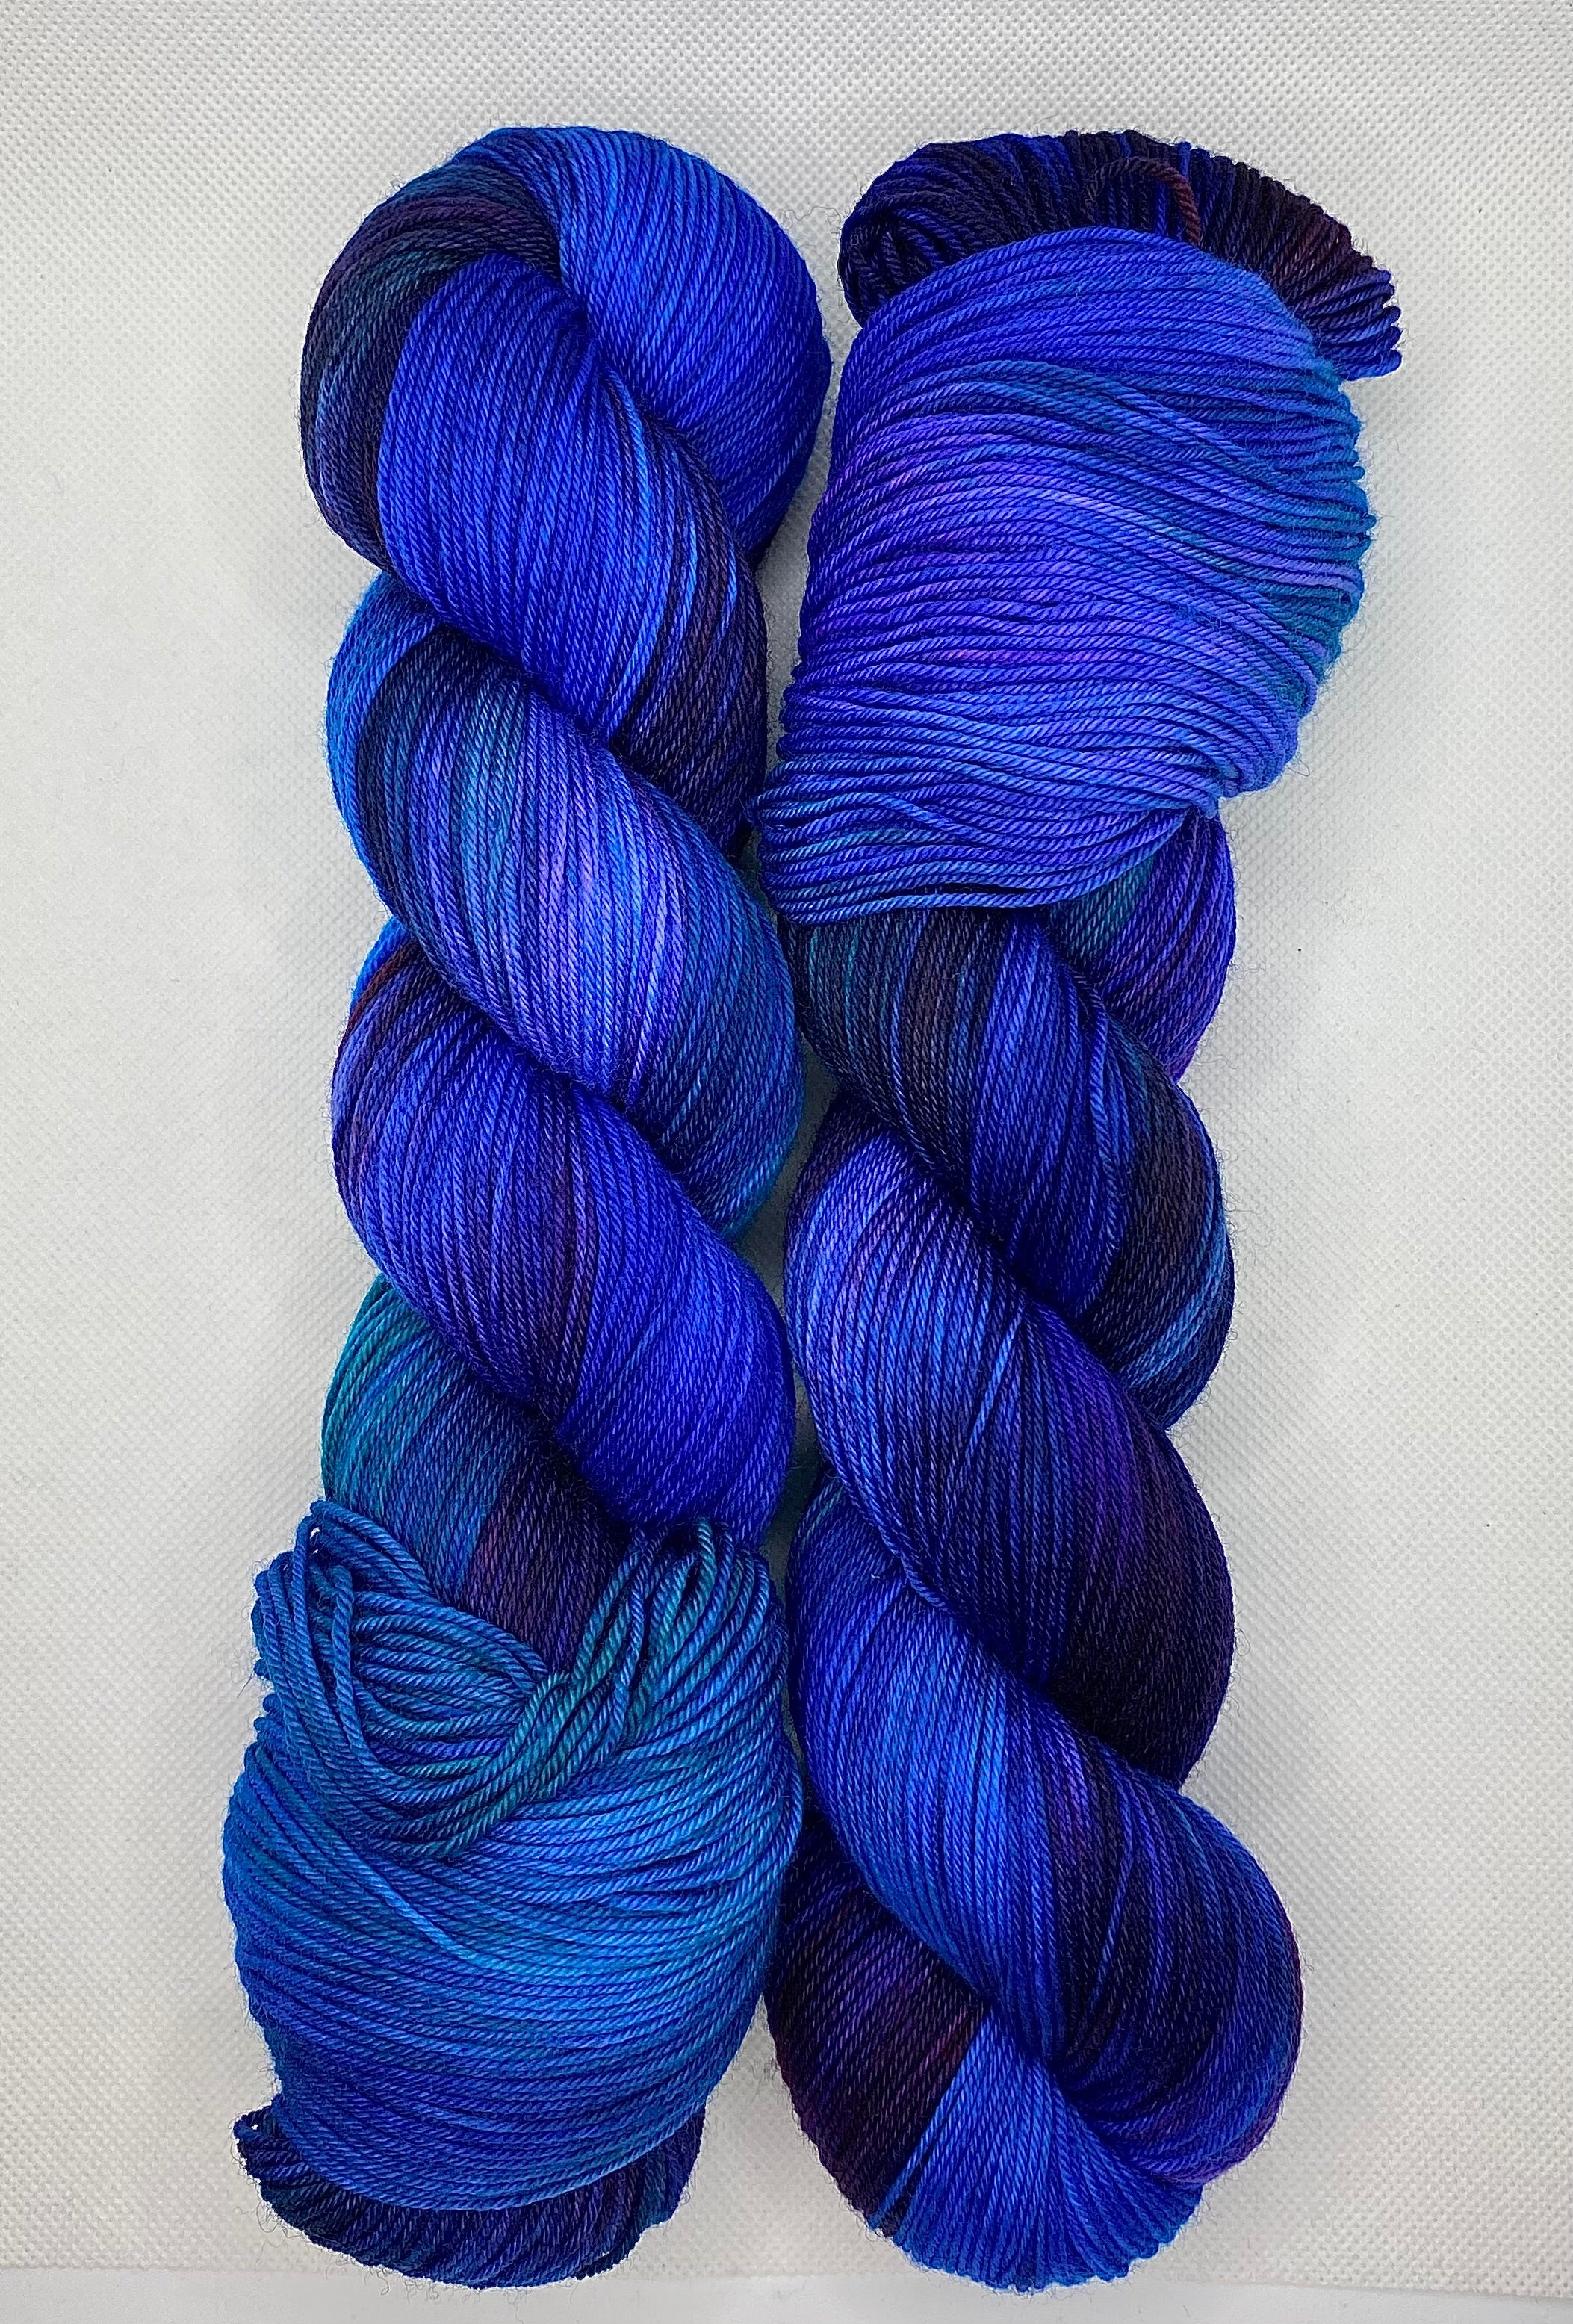 “Peacock” Hand Dyed Yarn